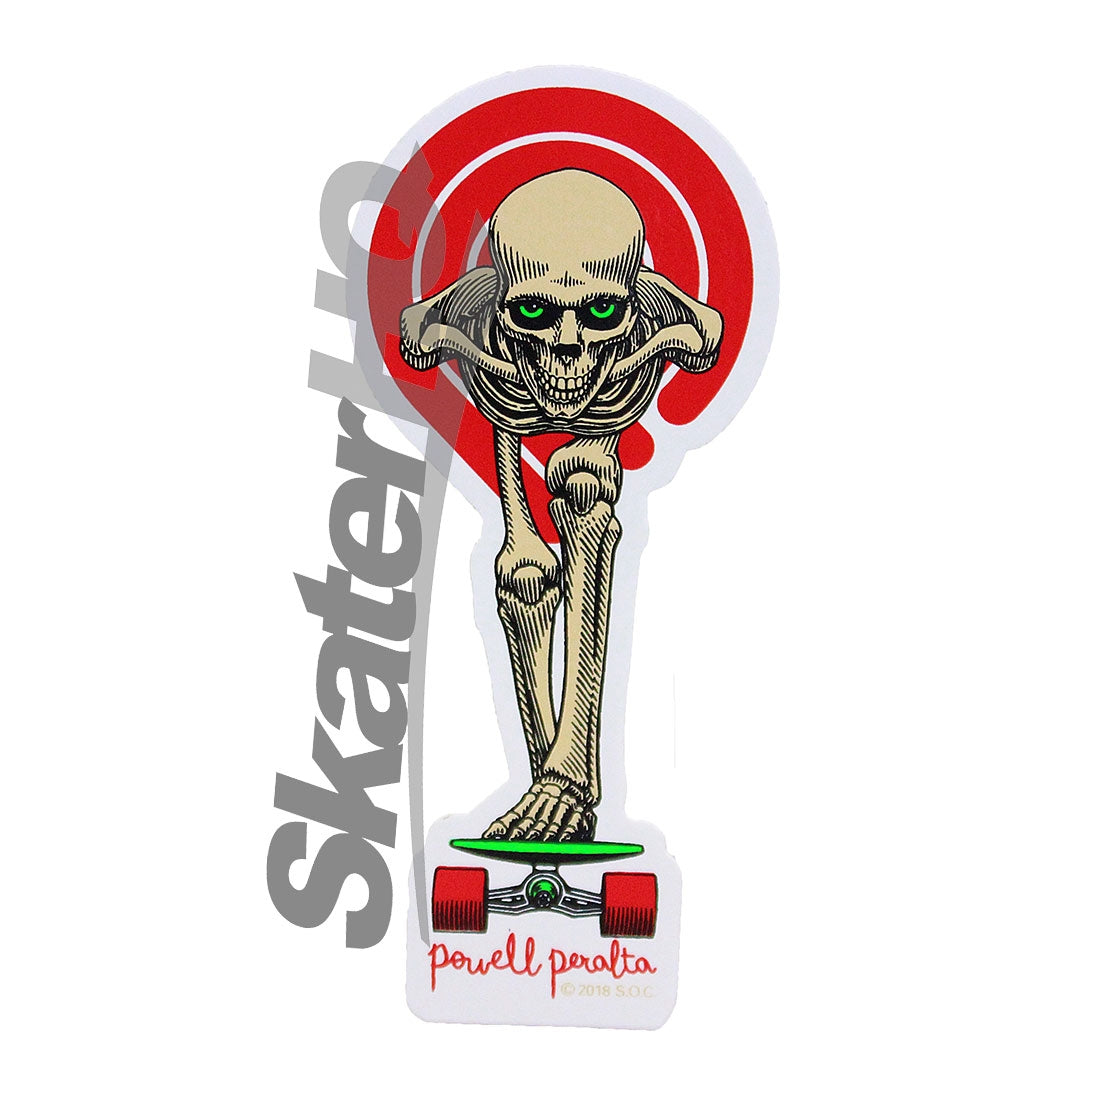 Powell Peralta Tucking Skeleton Diecut Sticker Stickers